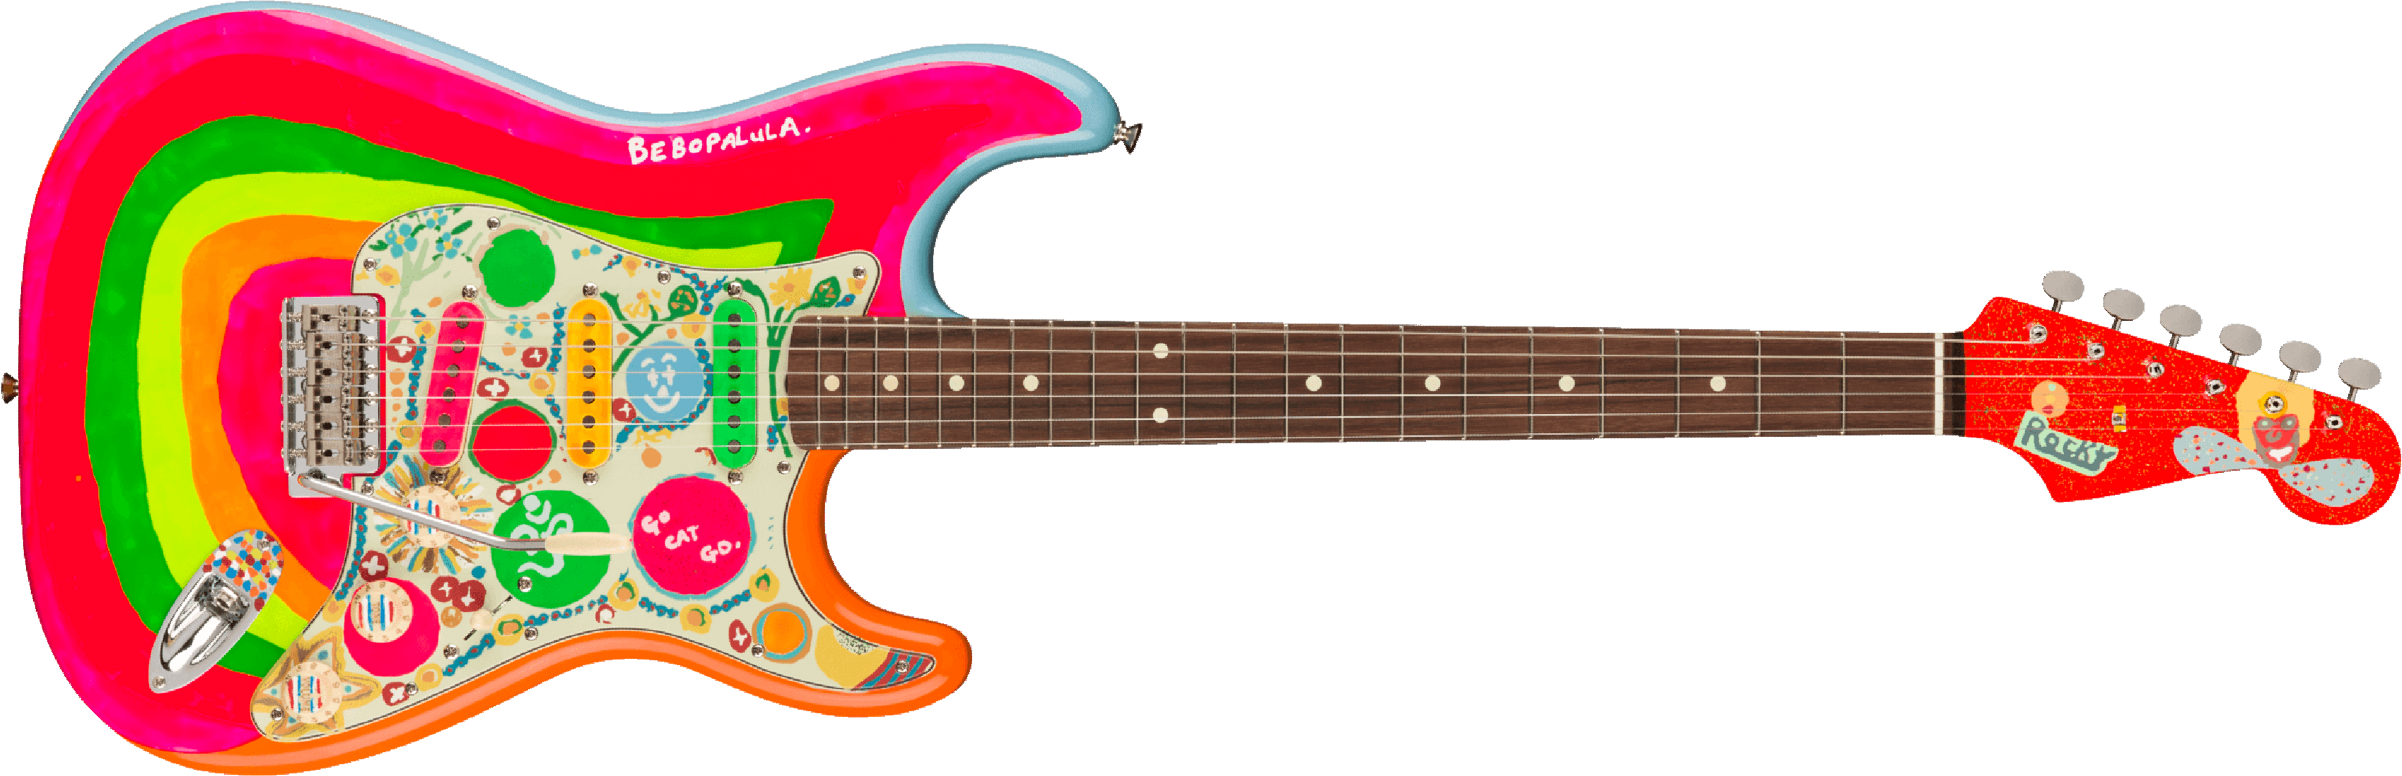 Fender Stratocaster Mex George Harrison Rocky Trem 3s Rw - Hand Painted Rocky Artwork Over Sonic Blue - Guitarra eléctrica con forma de str. - Main pi